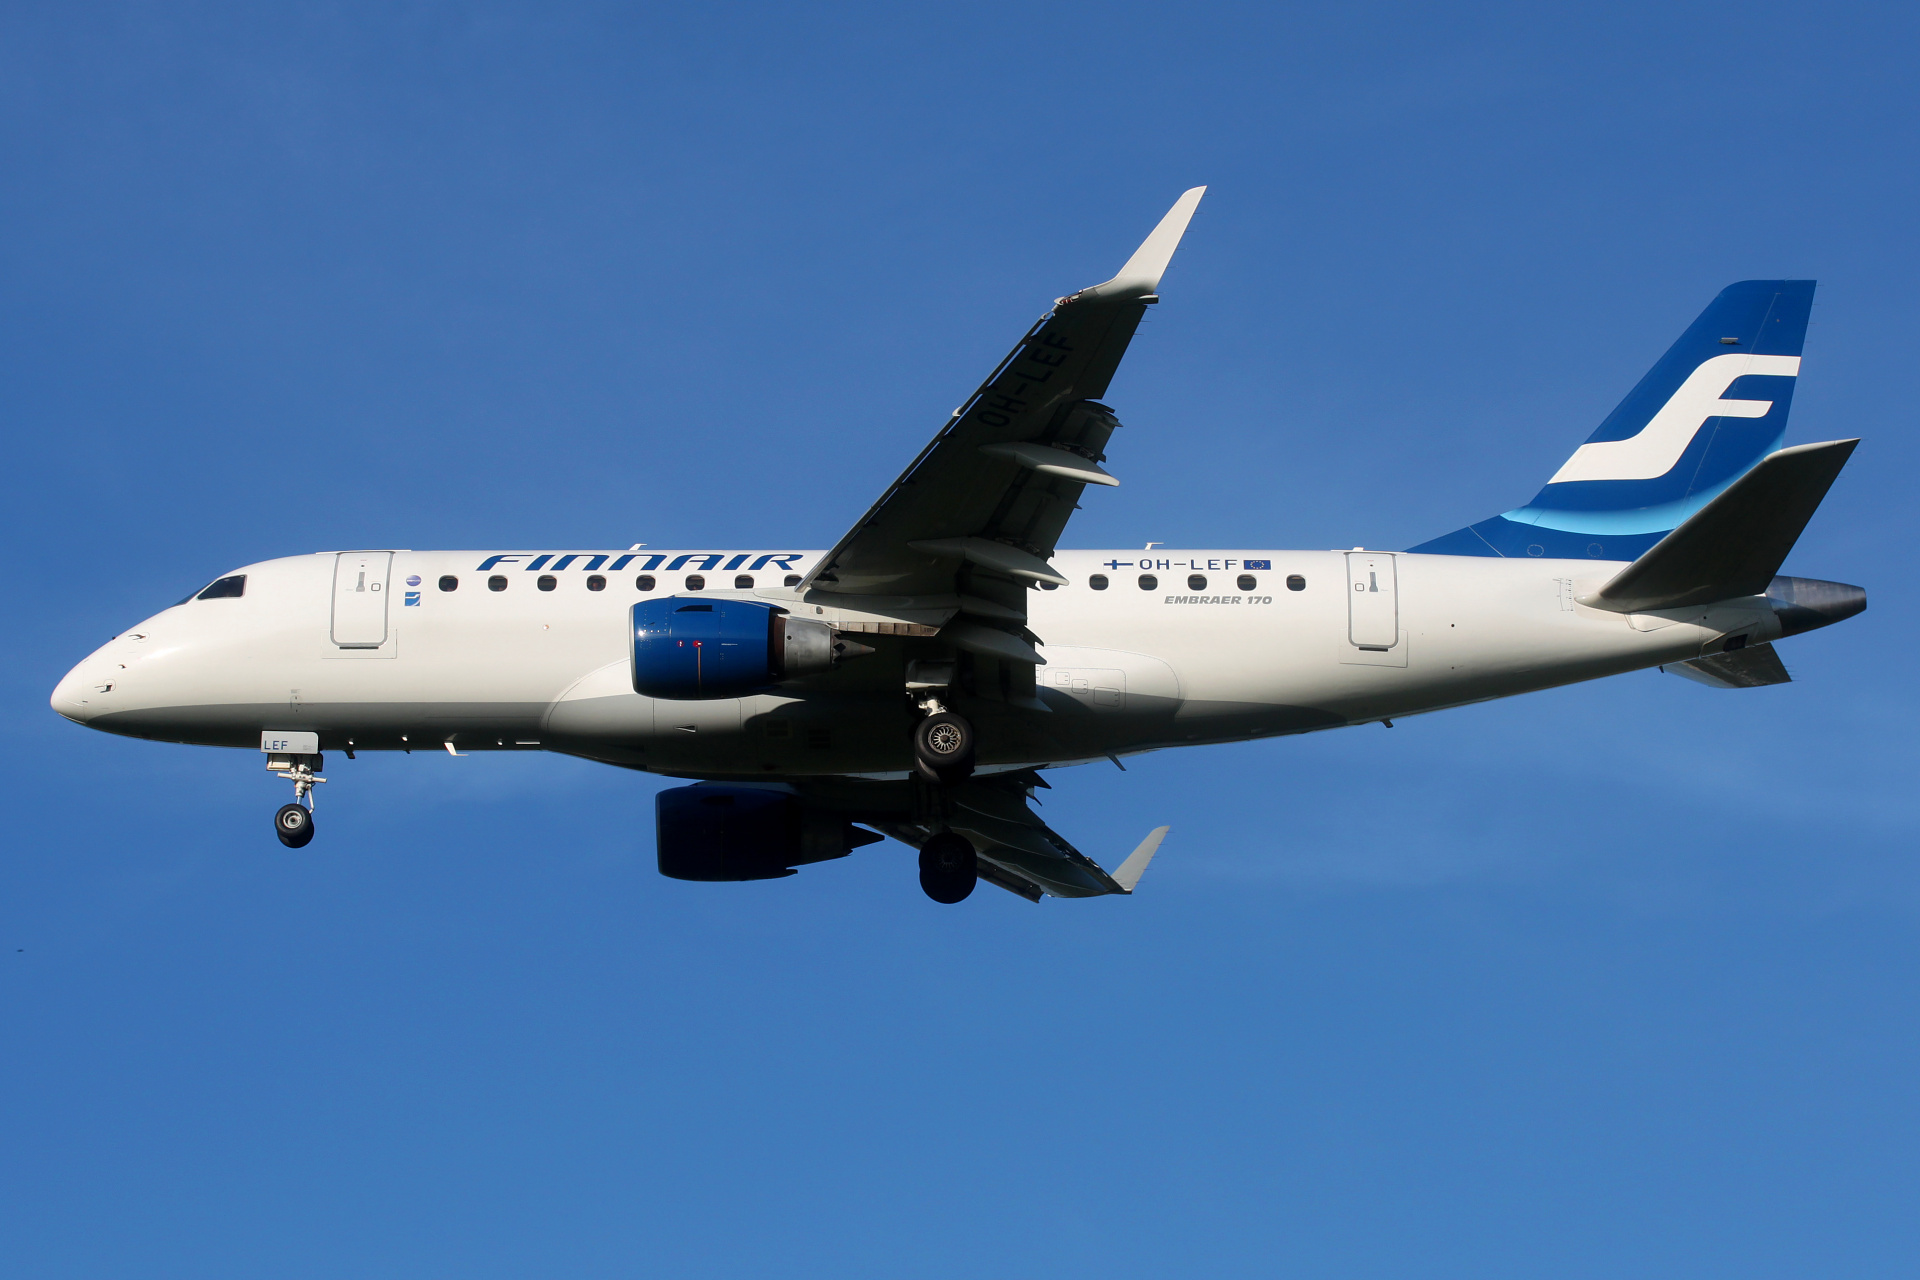 OH-LEF (Aircraft » EPWA Spotting » Embraer E170 » Finnair)